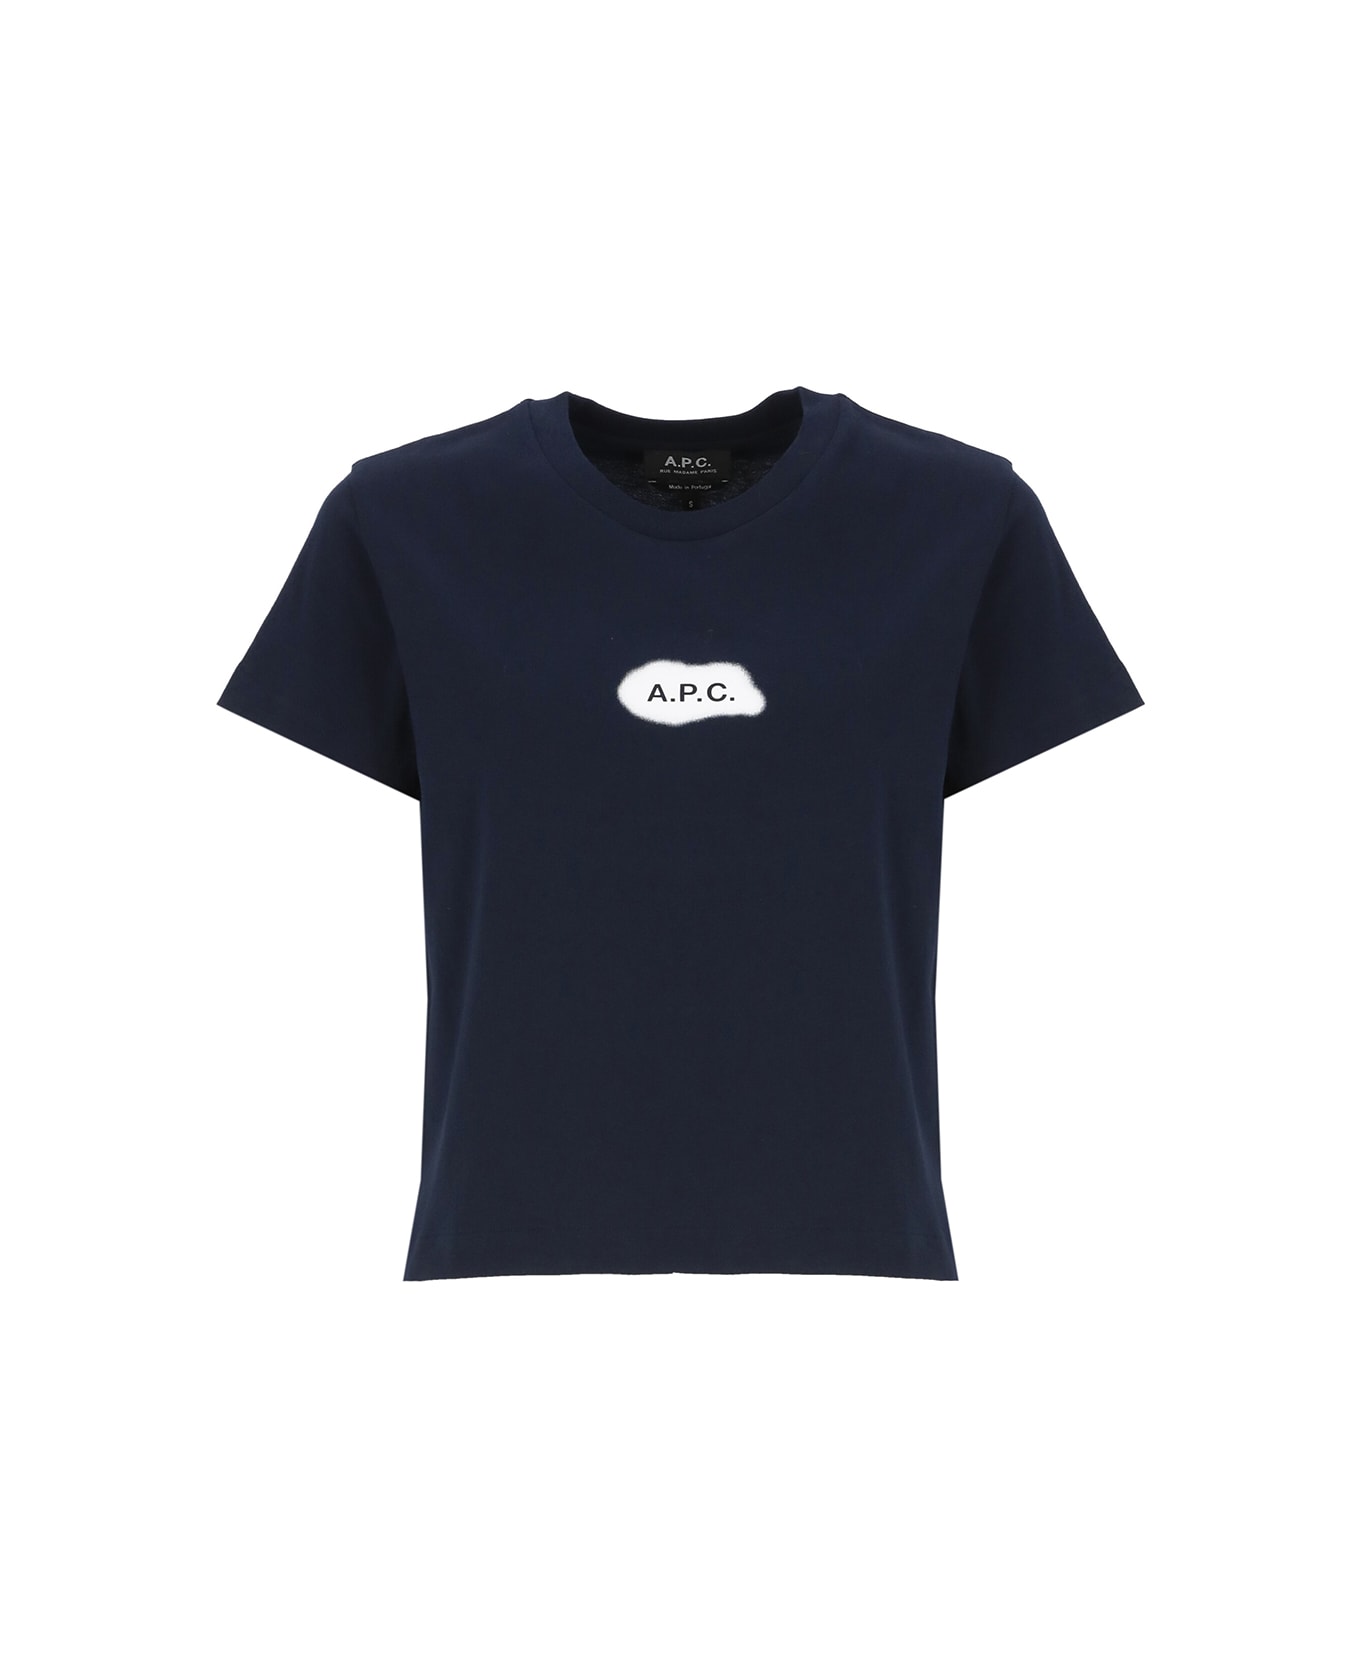 A.P.C. Astoria T-shirt - Blue